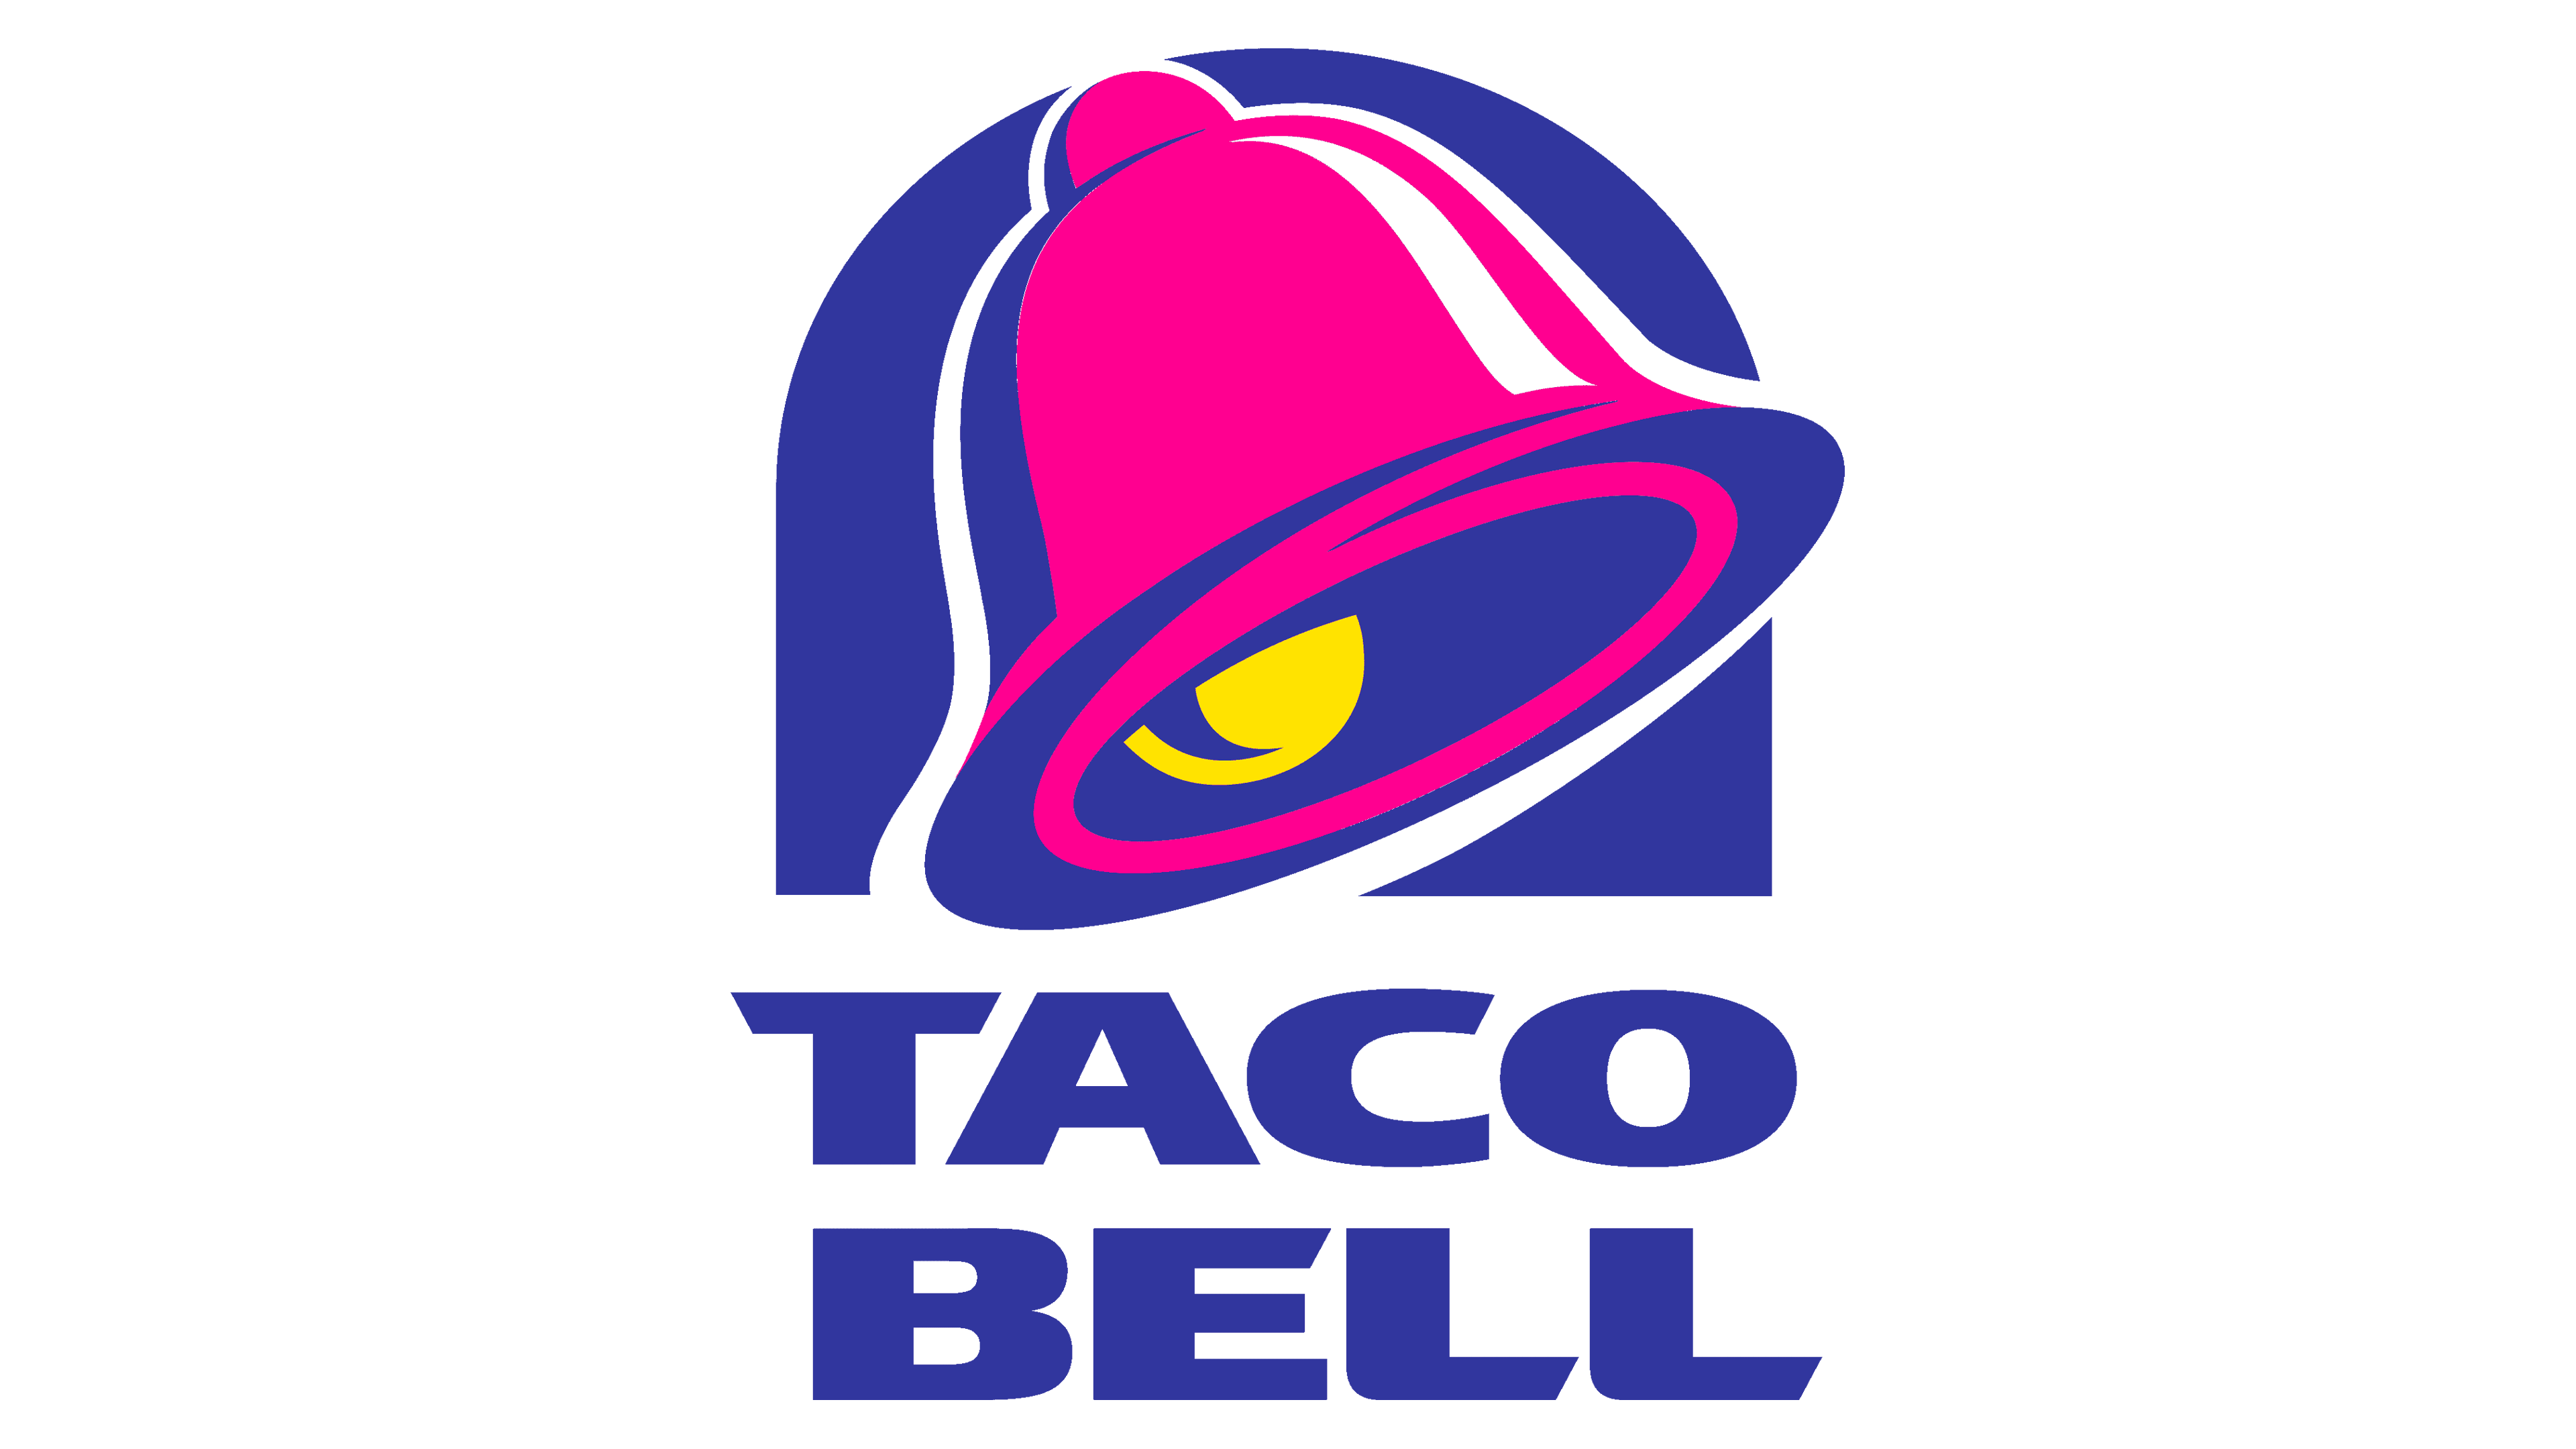 Taco Bell Logo Png Gratis Descarga De Archivos Png Pl vrogue.co